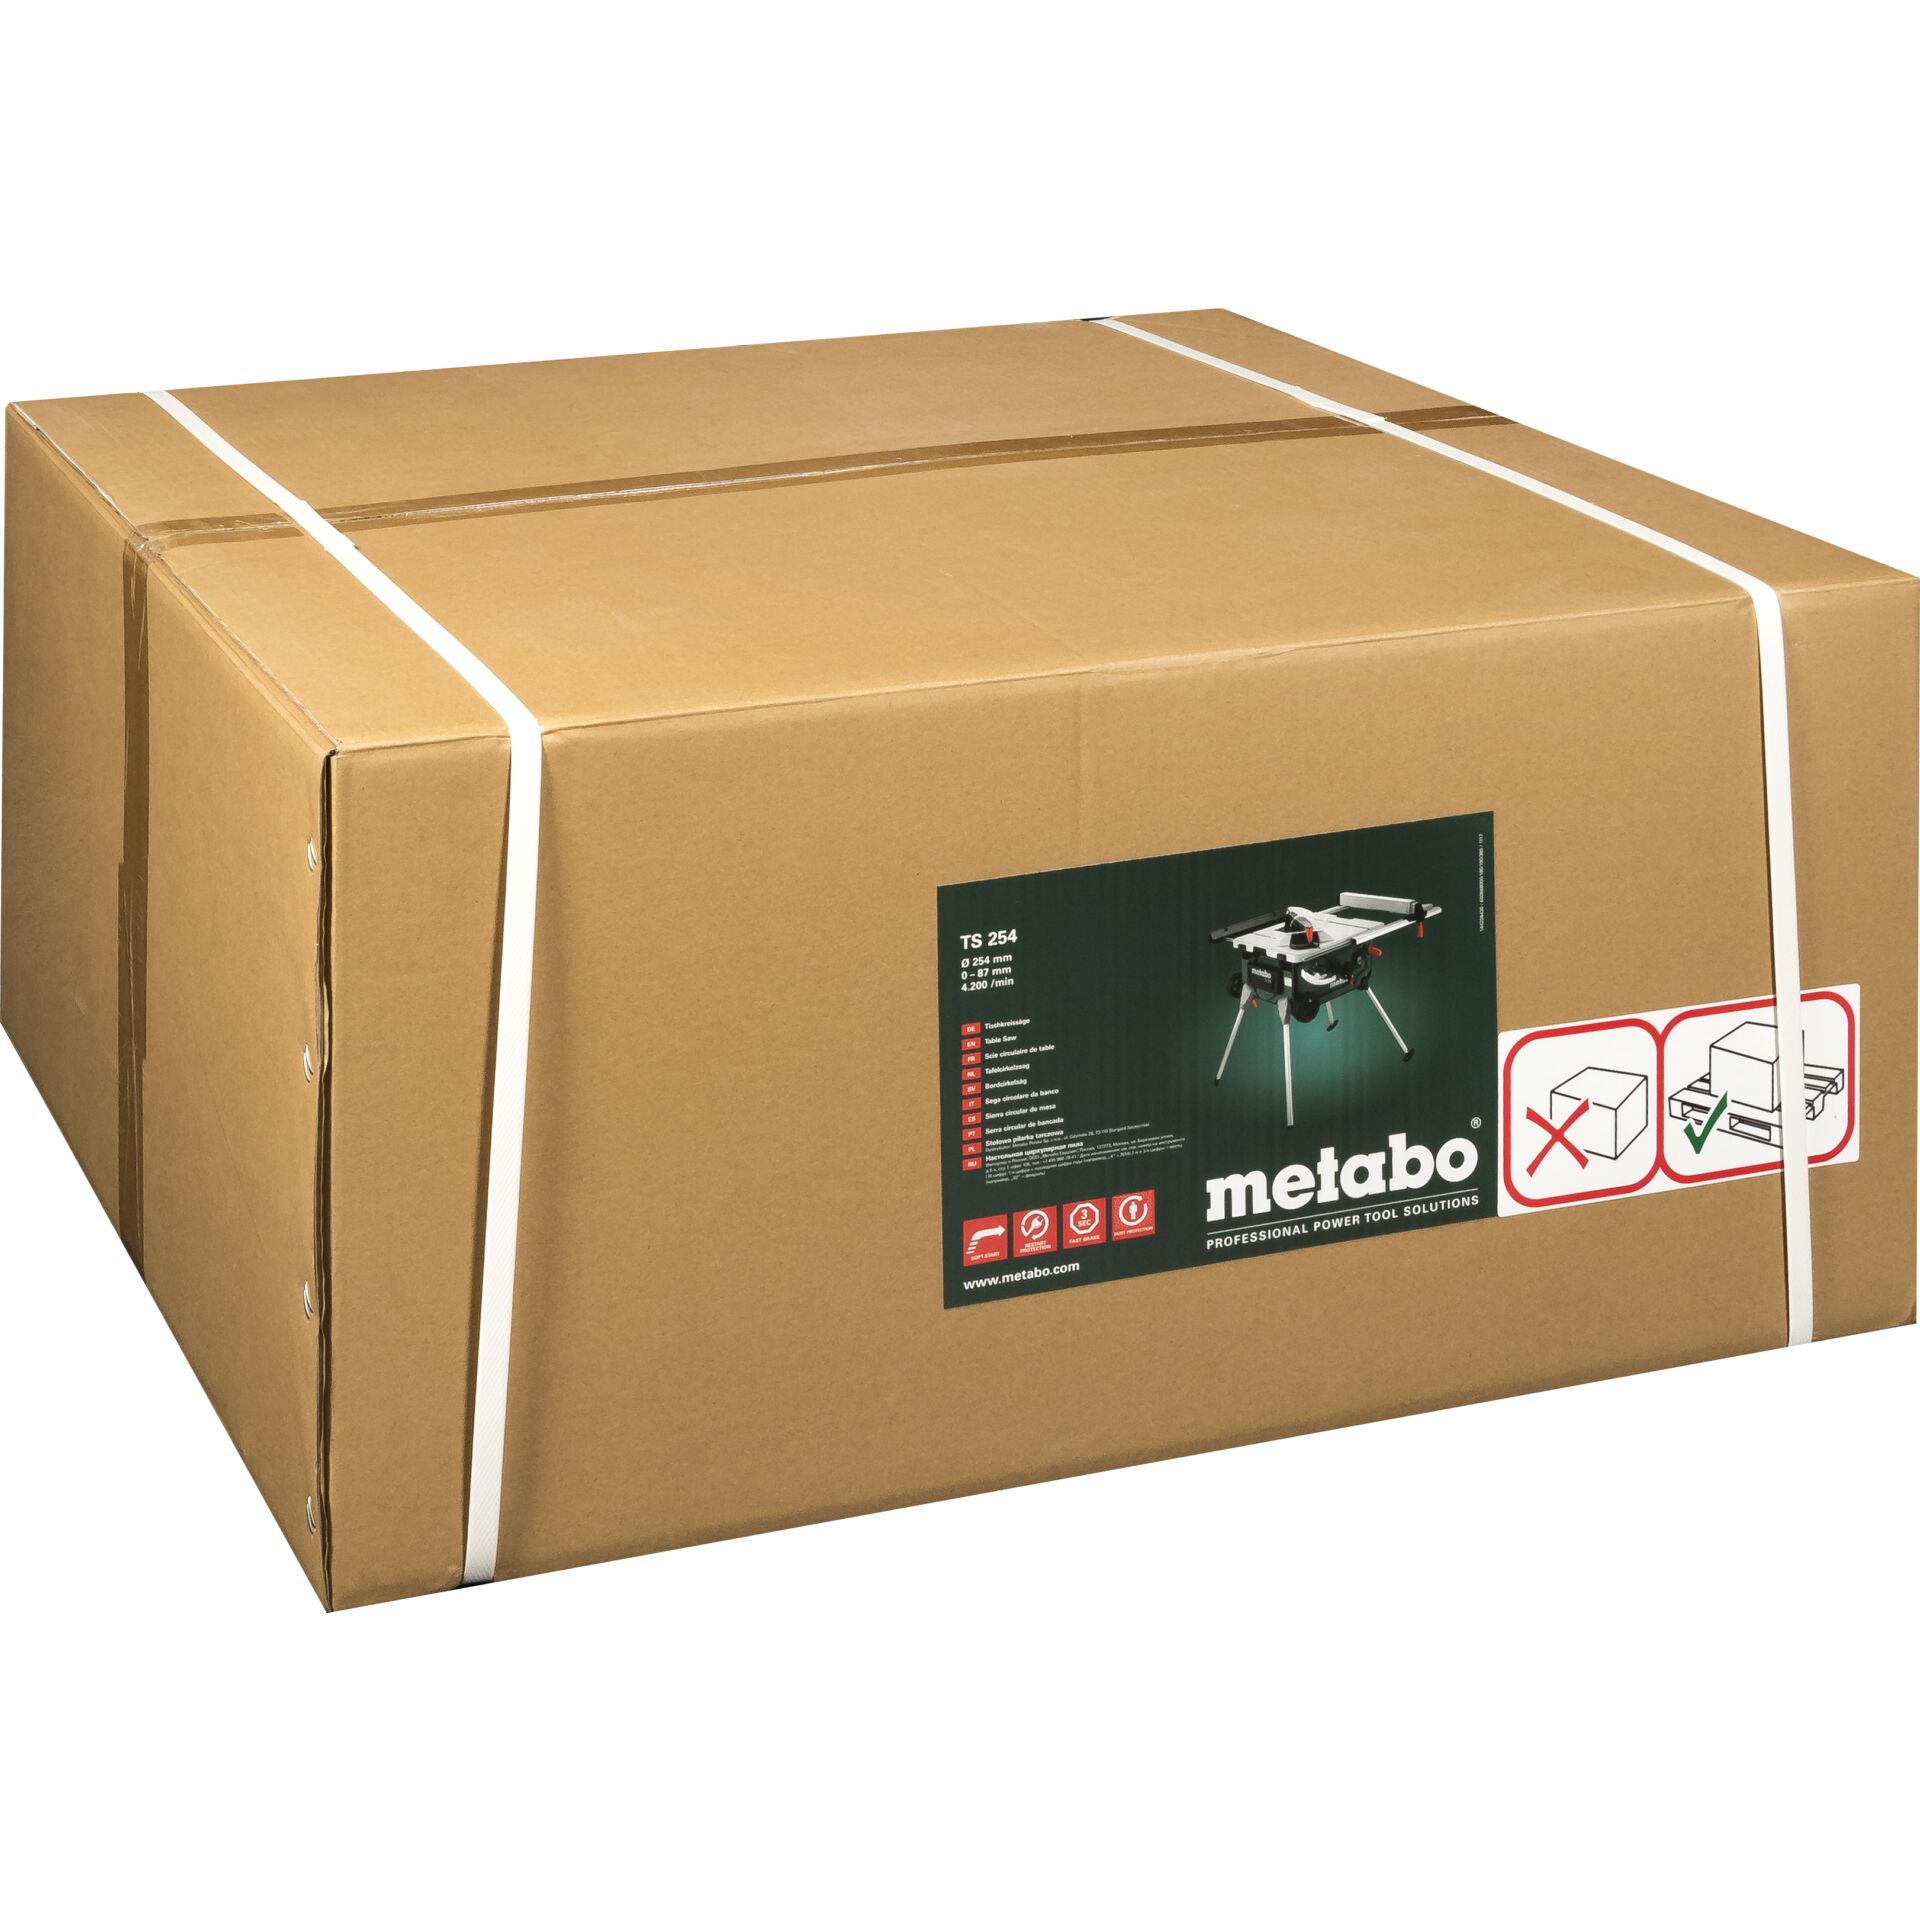 Metabo TS 254 sega da banco - Metabo - Autoscatto Store